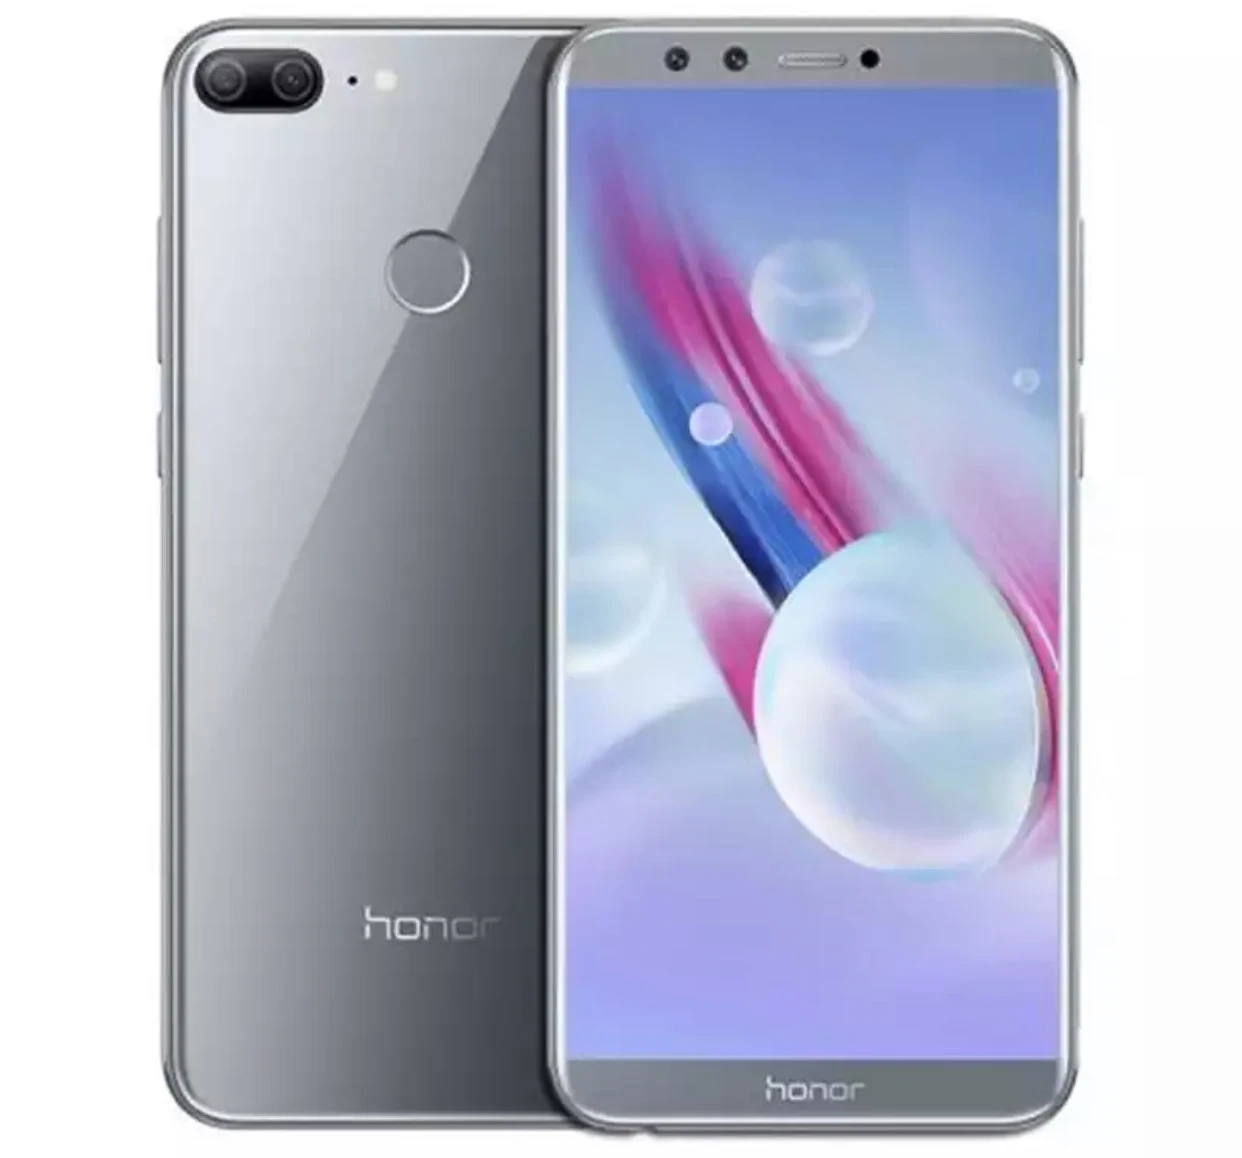 Huawei 3 32. Huawei Honor 9 Lite. Смартфон хонор 9 Лайт. Honor 9 Lite 32gb синий. Зонор 9 Лаци.